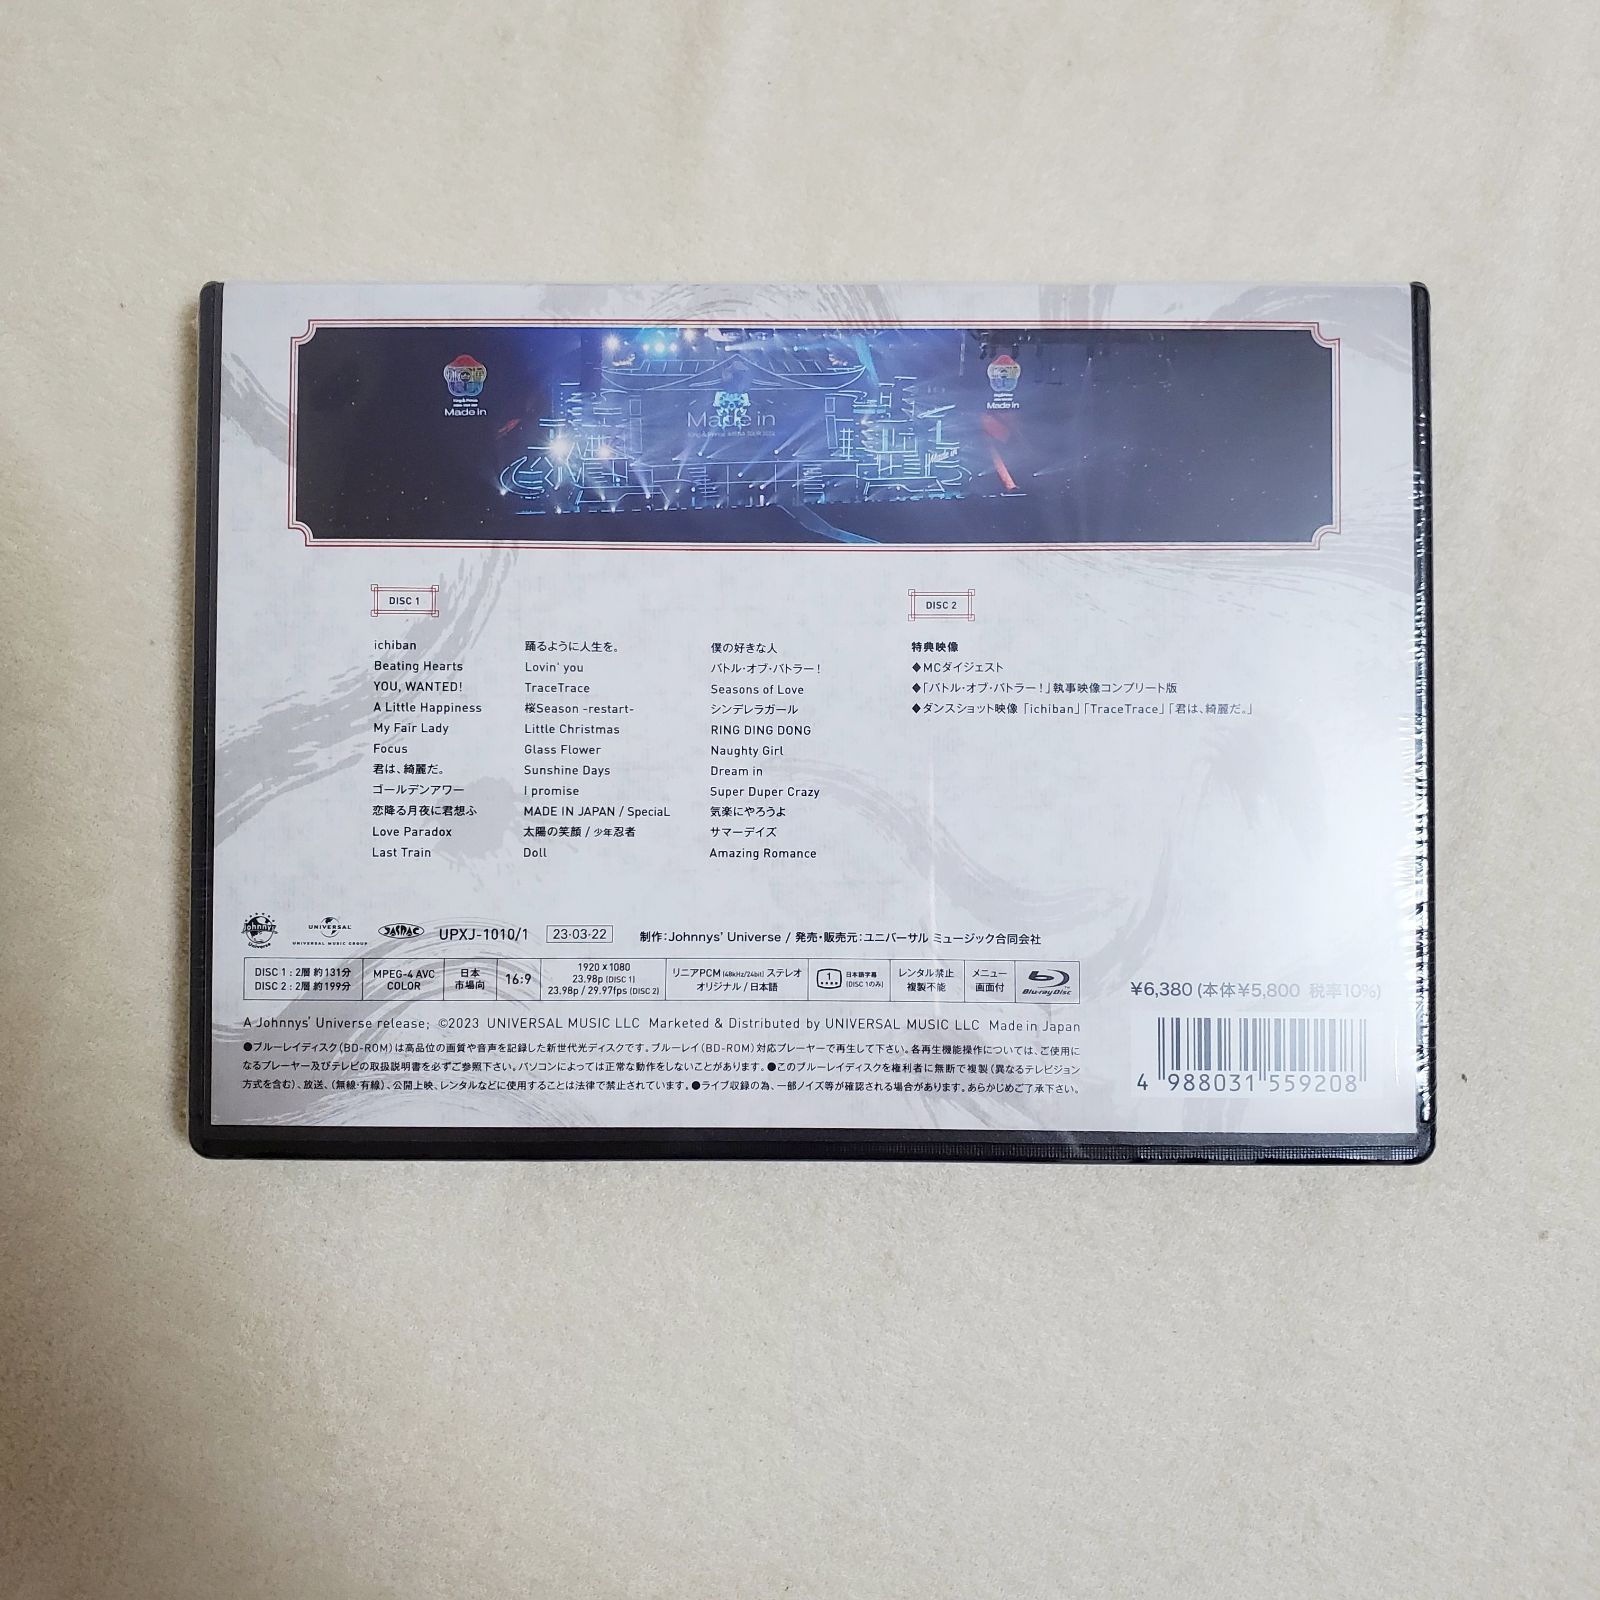 King&prince made in 初回限定盤 通常盤 ブルーレイ Blu-ray 特典つき 